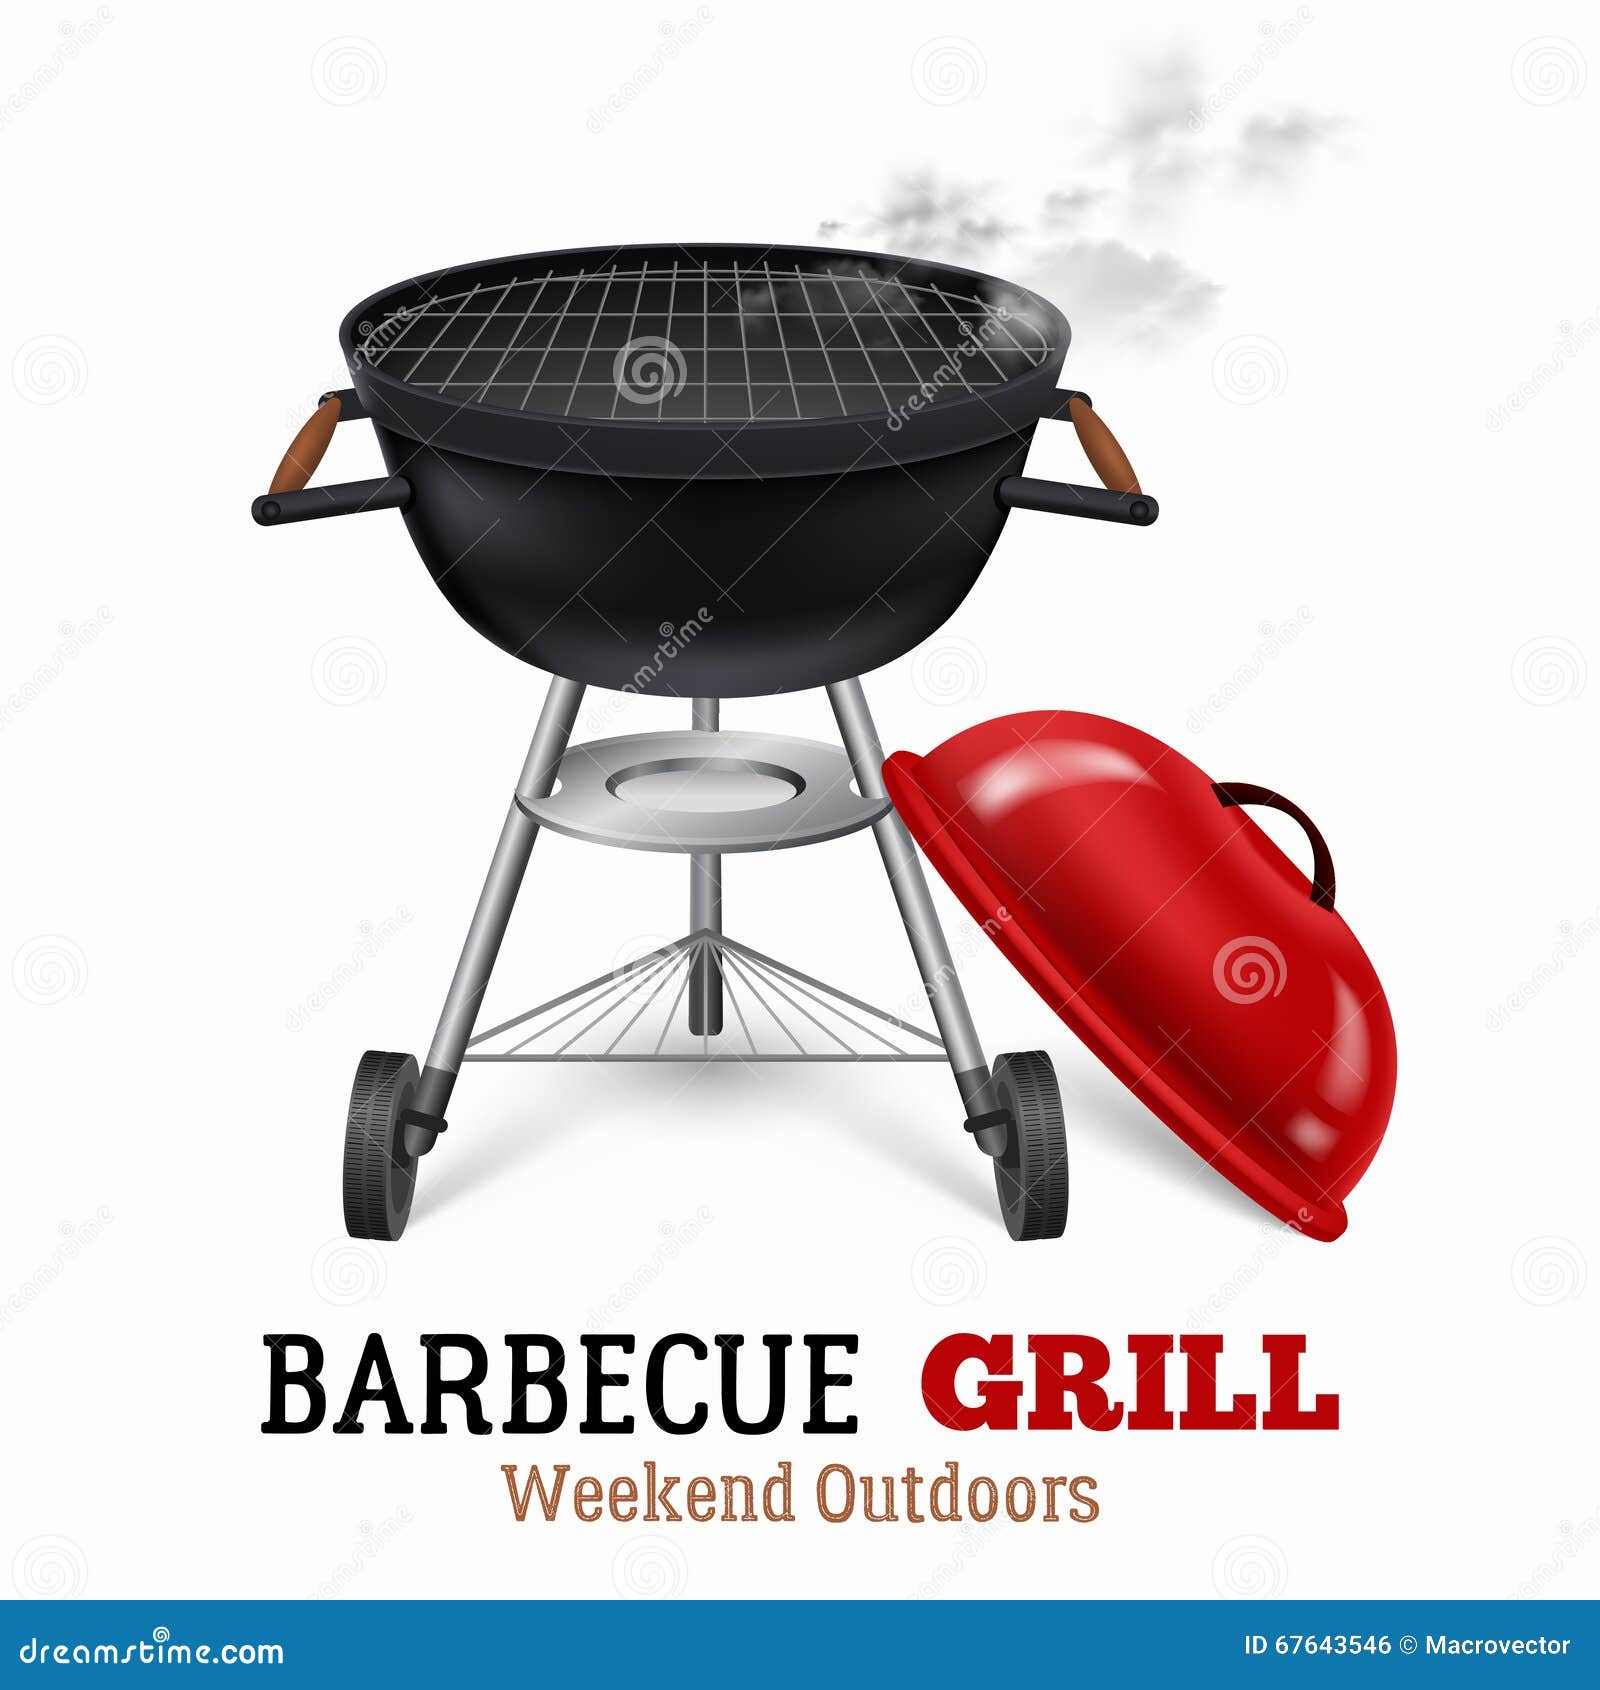 Barbecue Grill Illustration Stock Vector - Illustration of grill, kebab